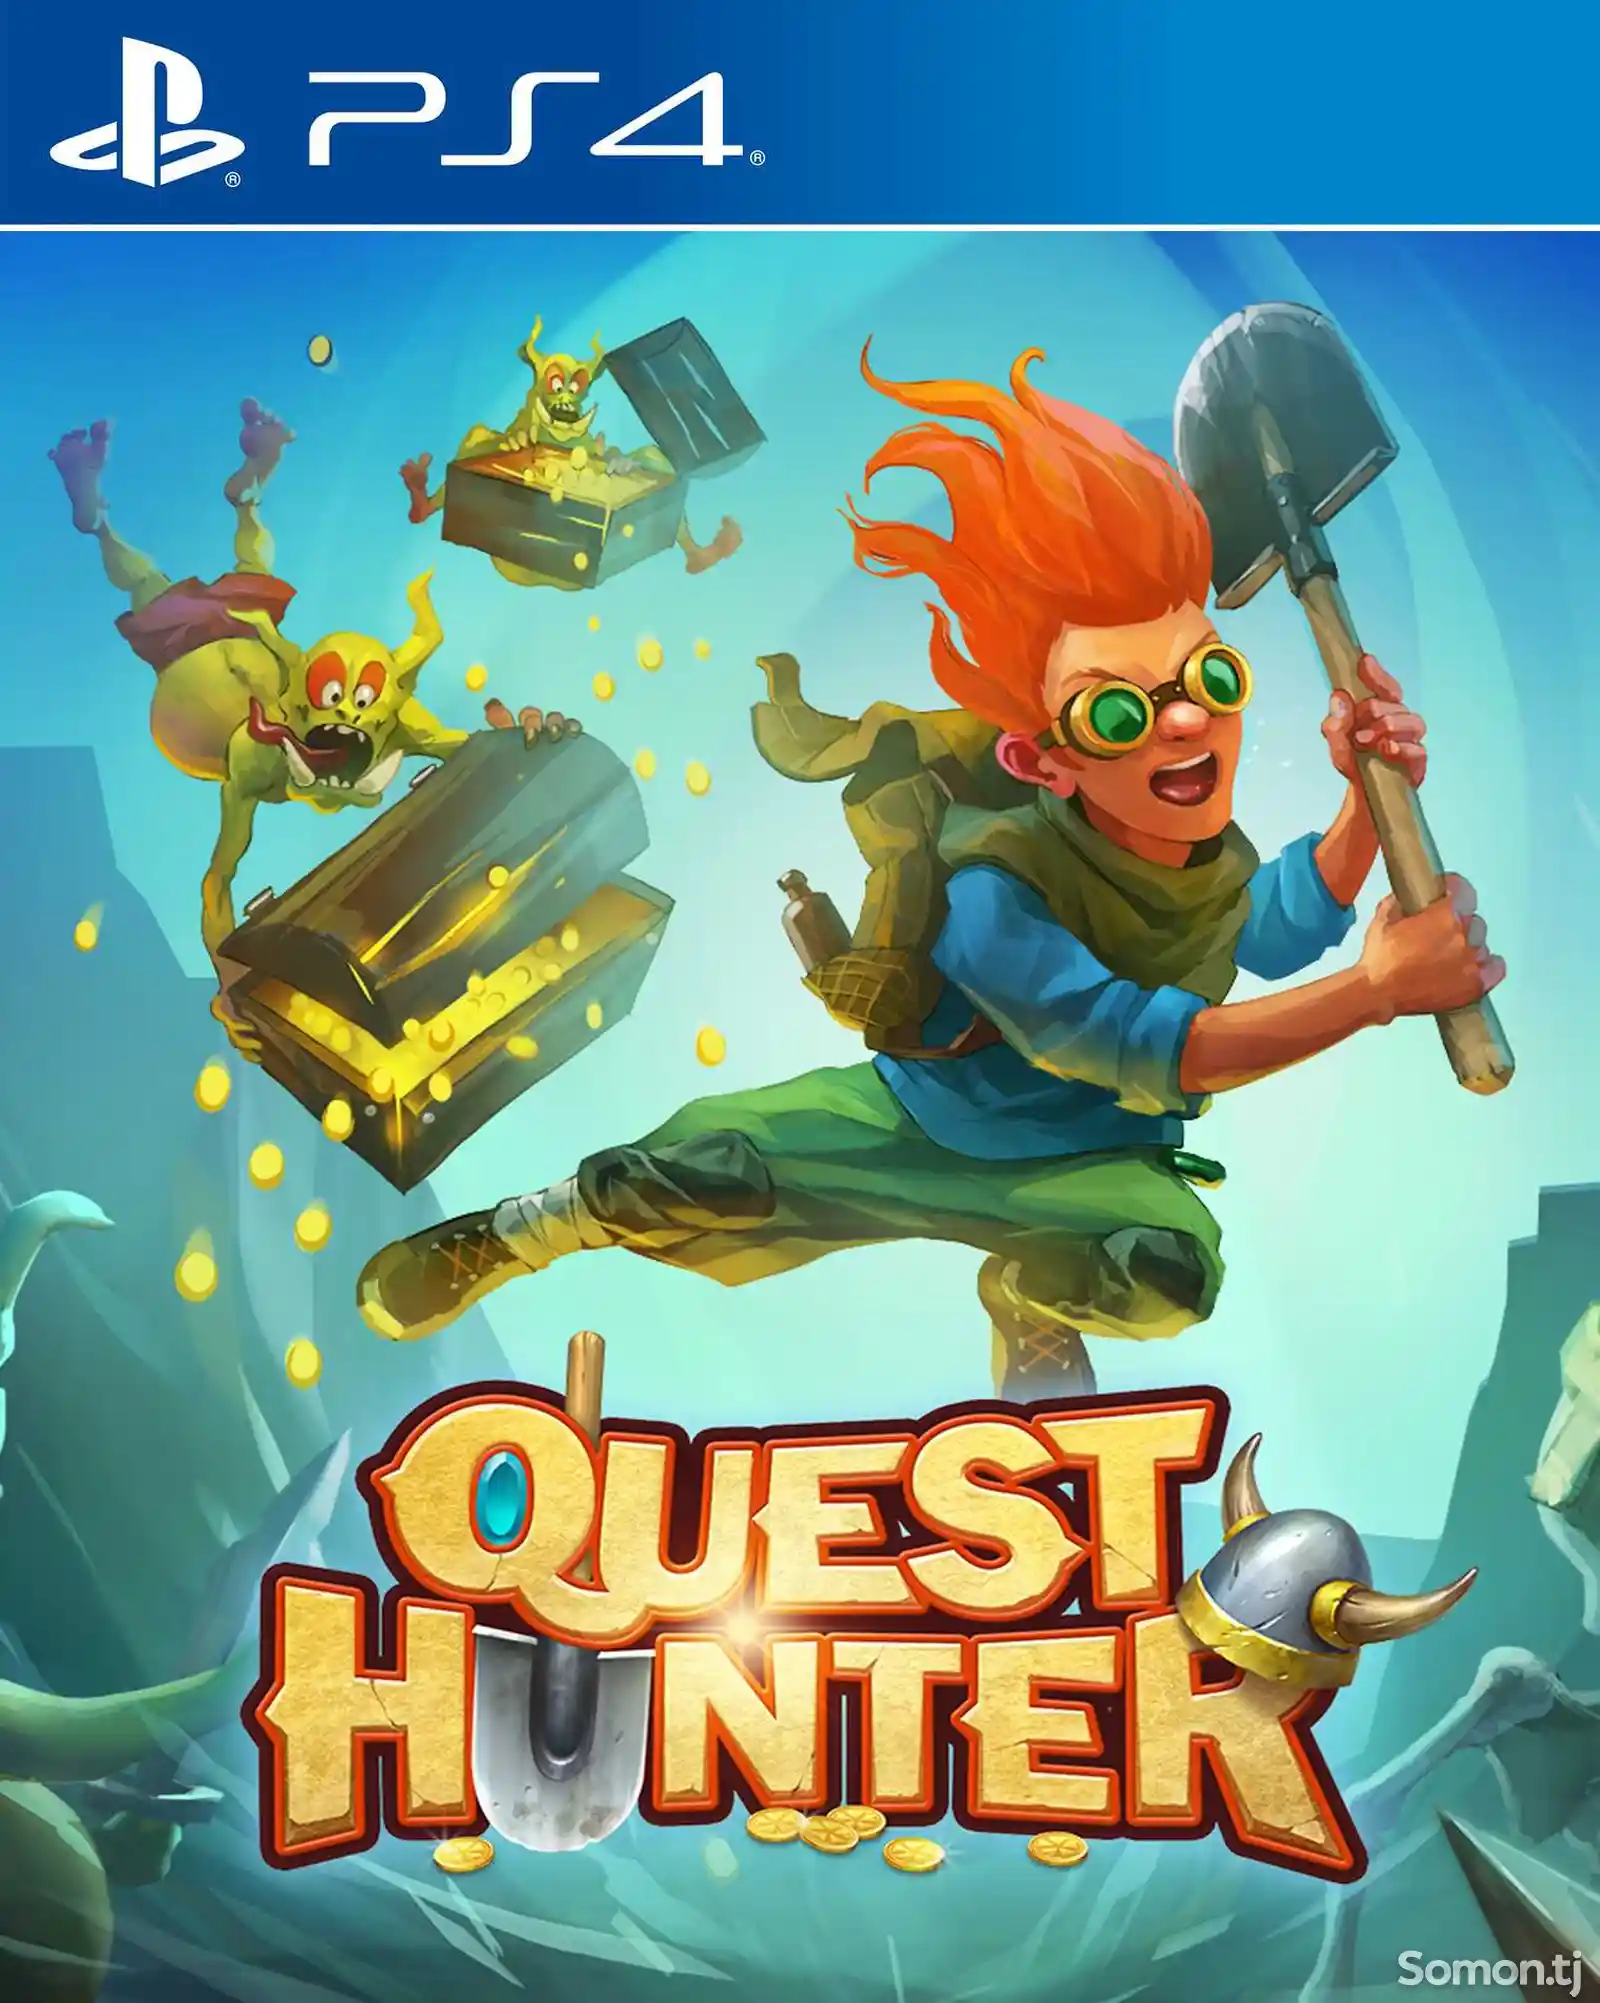 Игра Quest hunter для PS-4 / 5.05 / 6.72 / 7.02 / 7.55 / 9.00 /-1